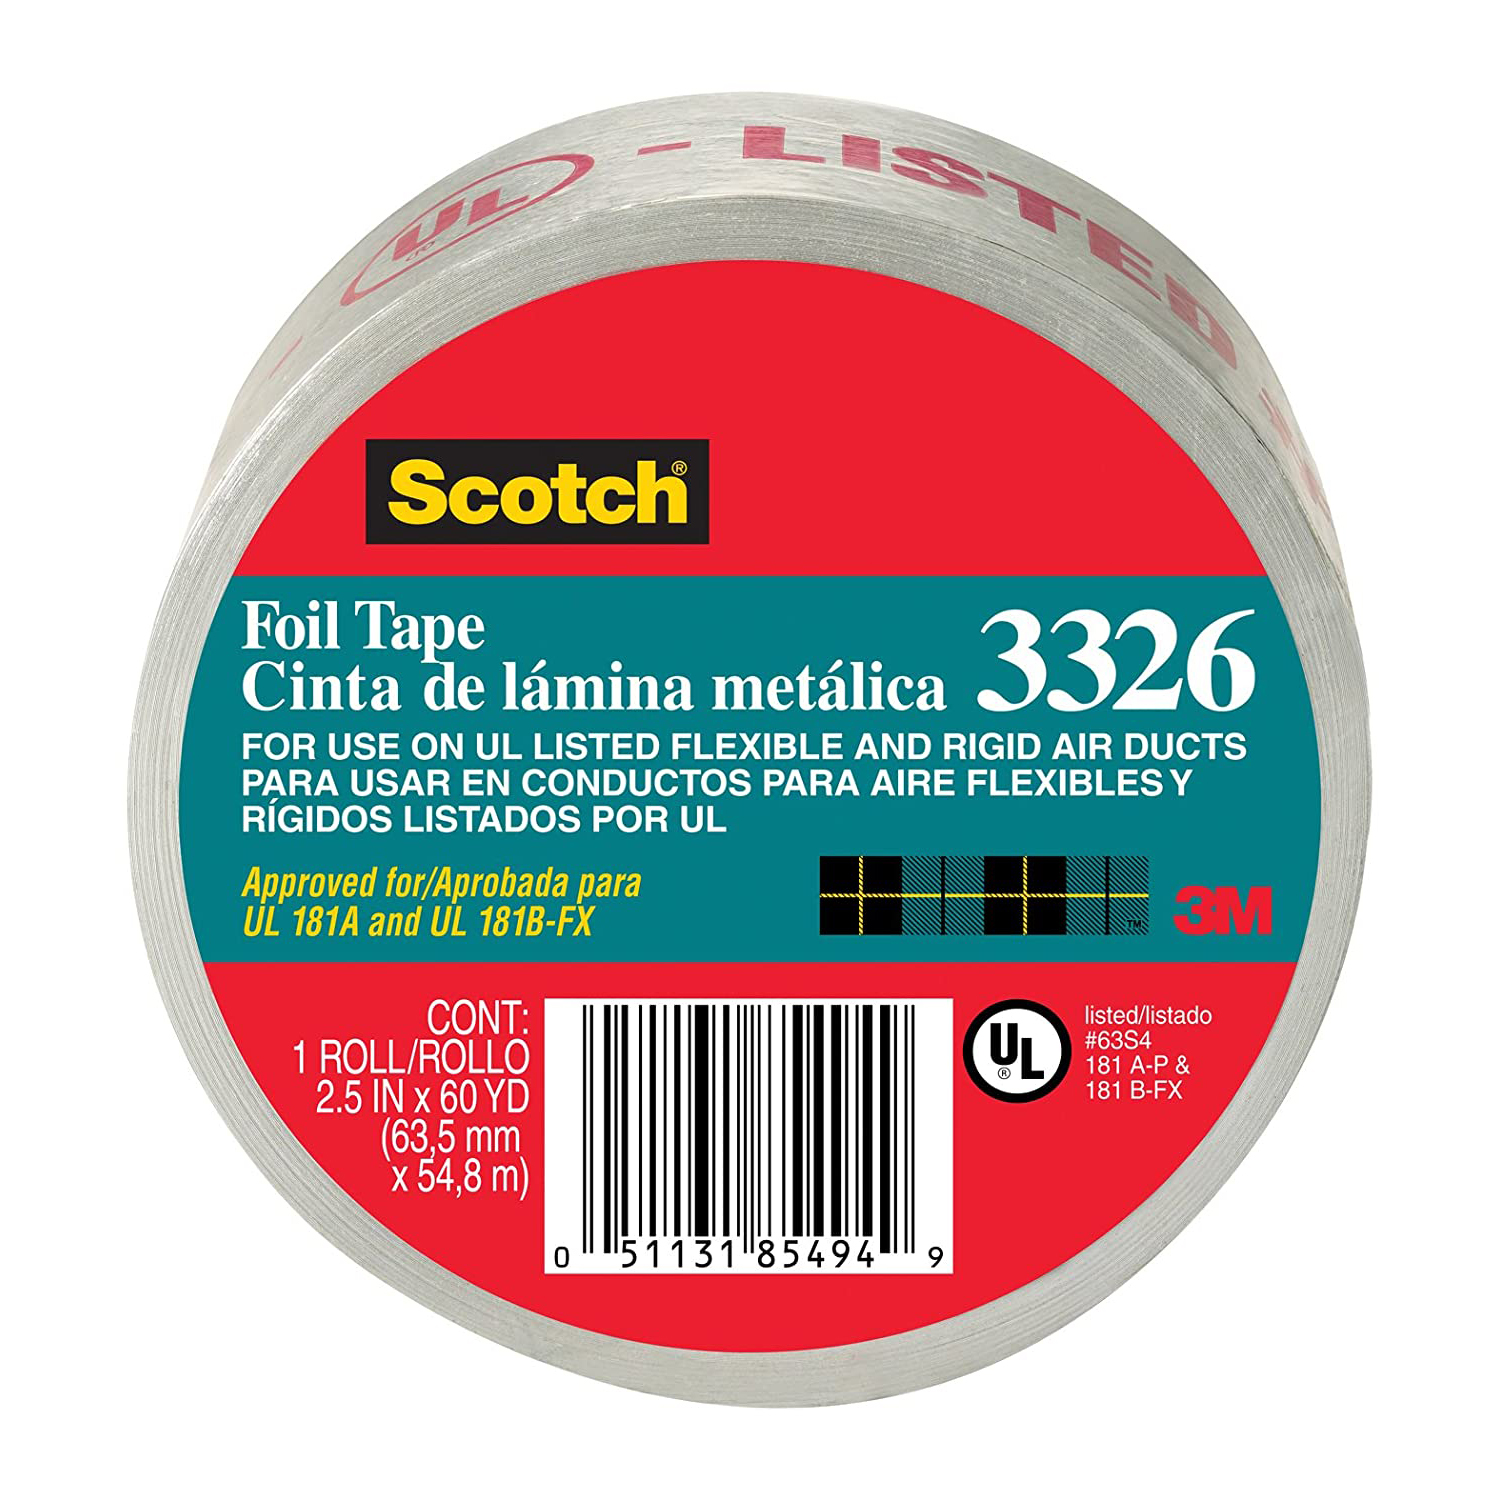 Scotch Foil Tape [UL 181 A &amp; B listed / Linered] (3326-A)